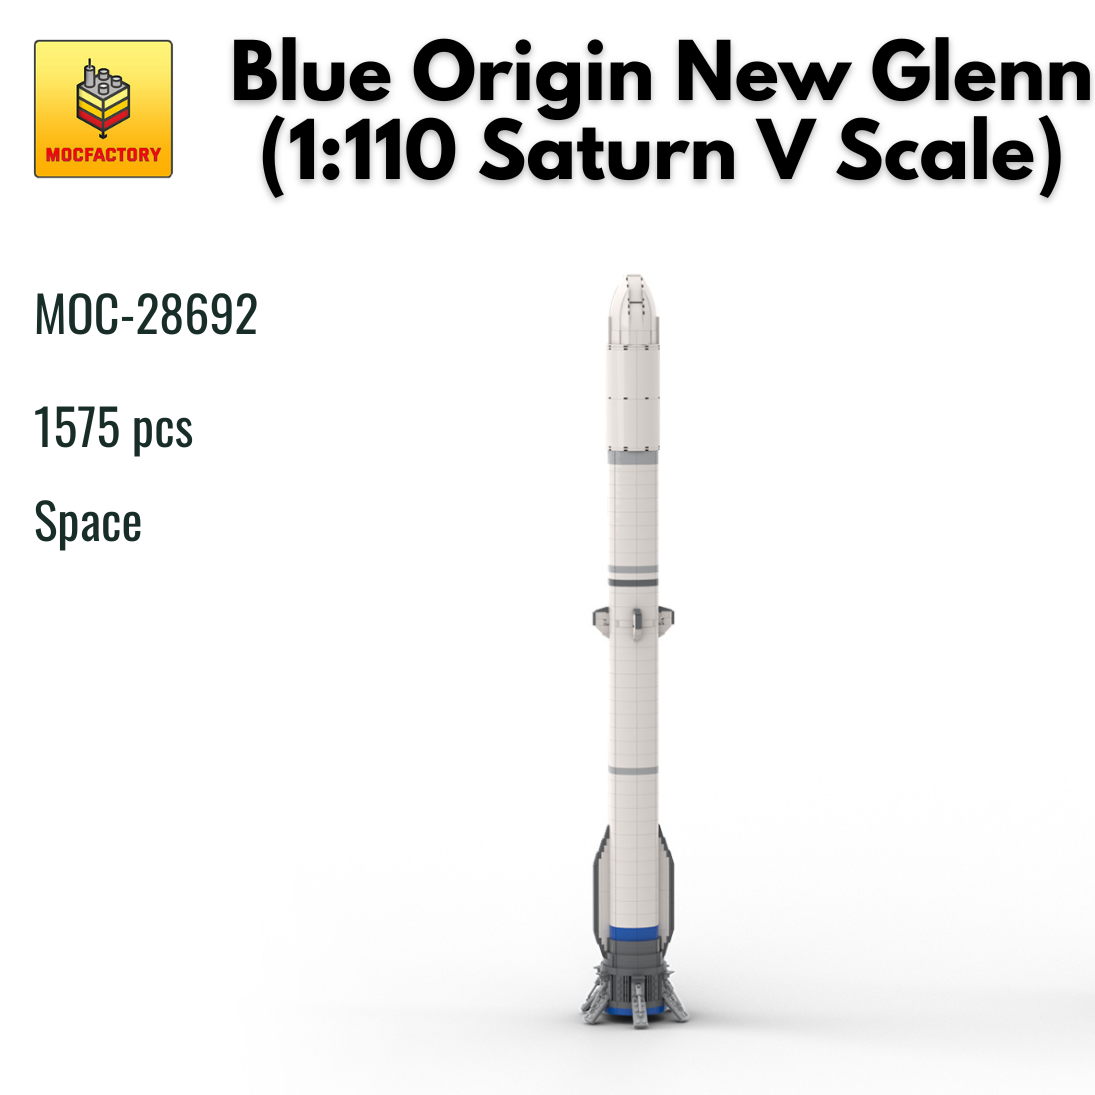 MOC-28692 Blue Origin New Glenn (1:110 Saturn V Scale) With 1575 Pieces